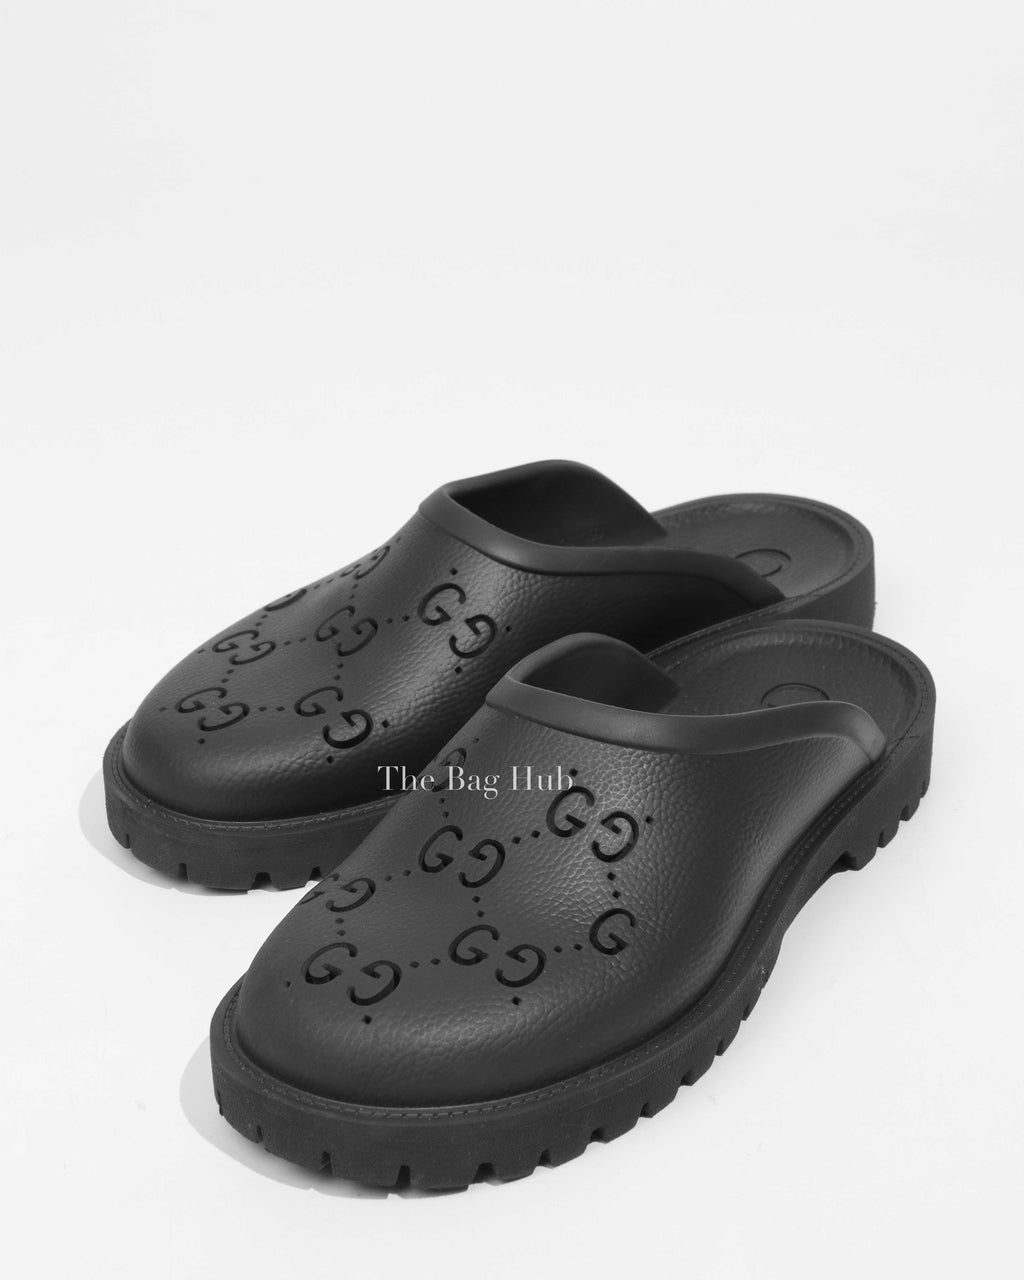 Gucci Black Rubber Men's Slip On Sandals Size 9-1